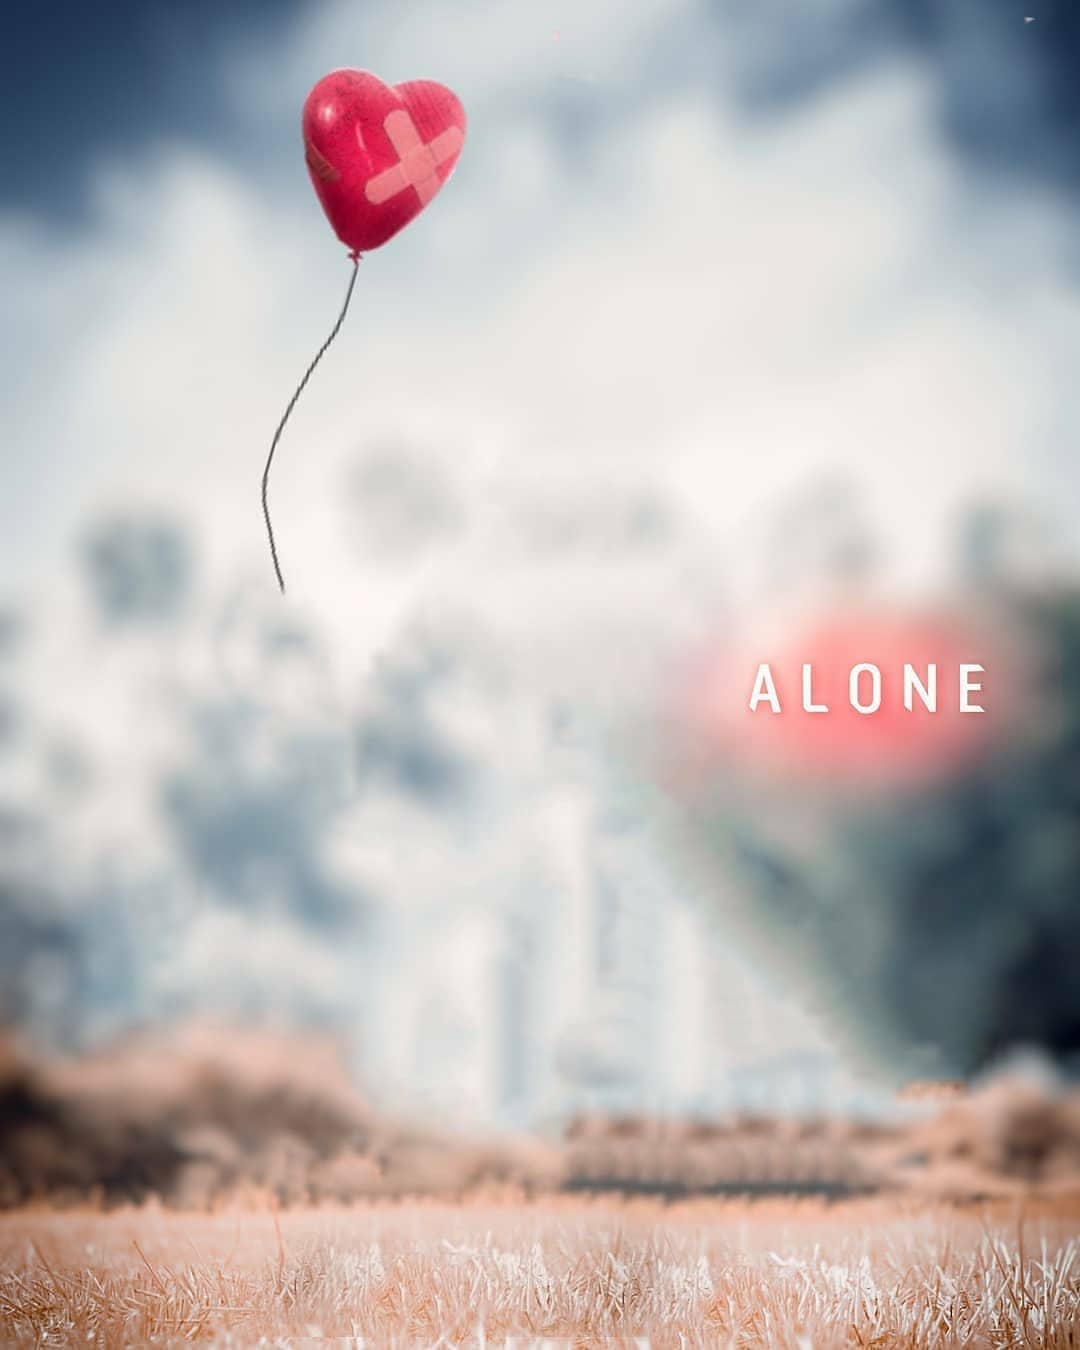  Alone Heart Balloon Picsart Editing Background Full HD Download ...